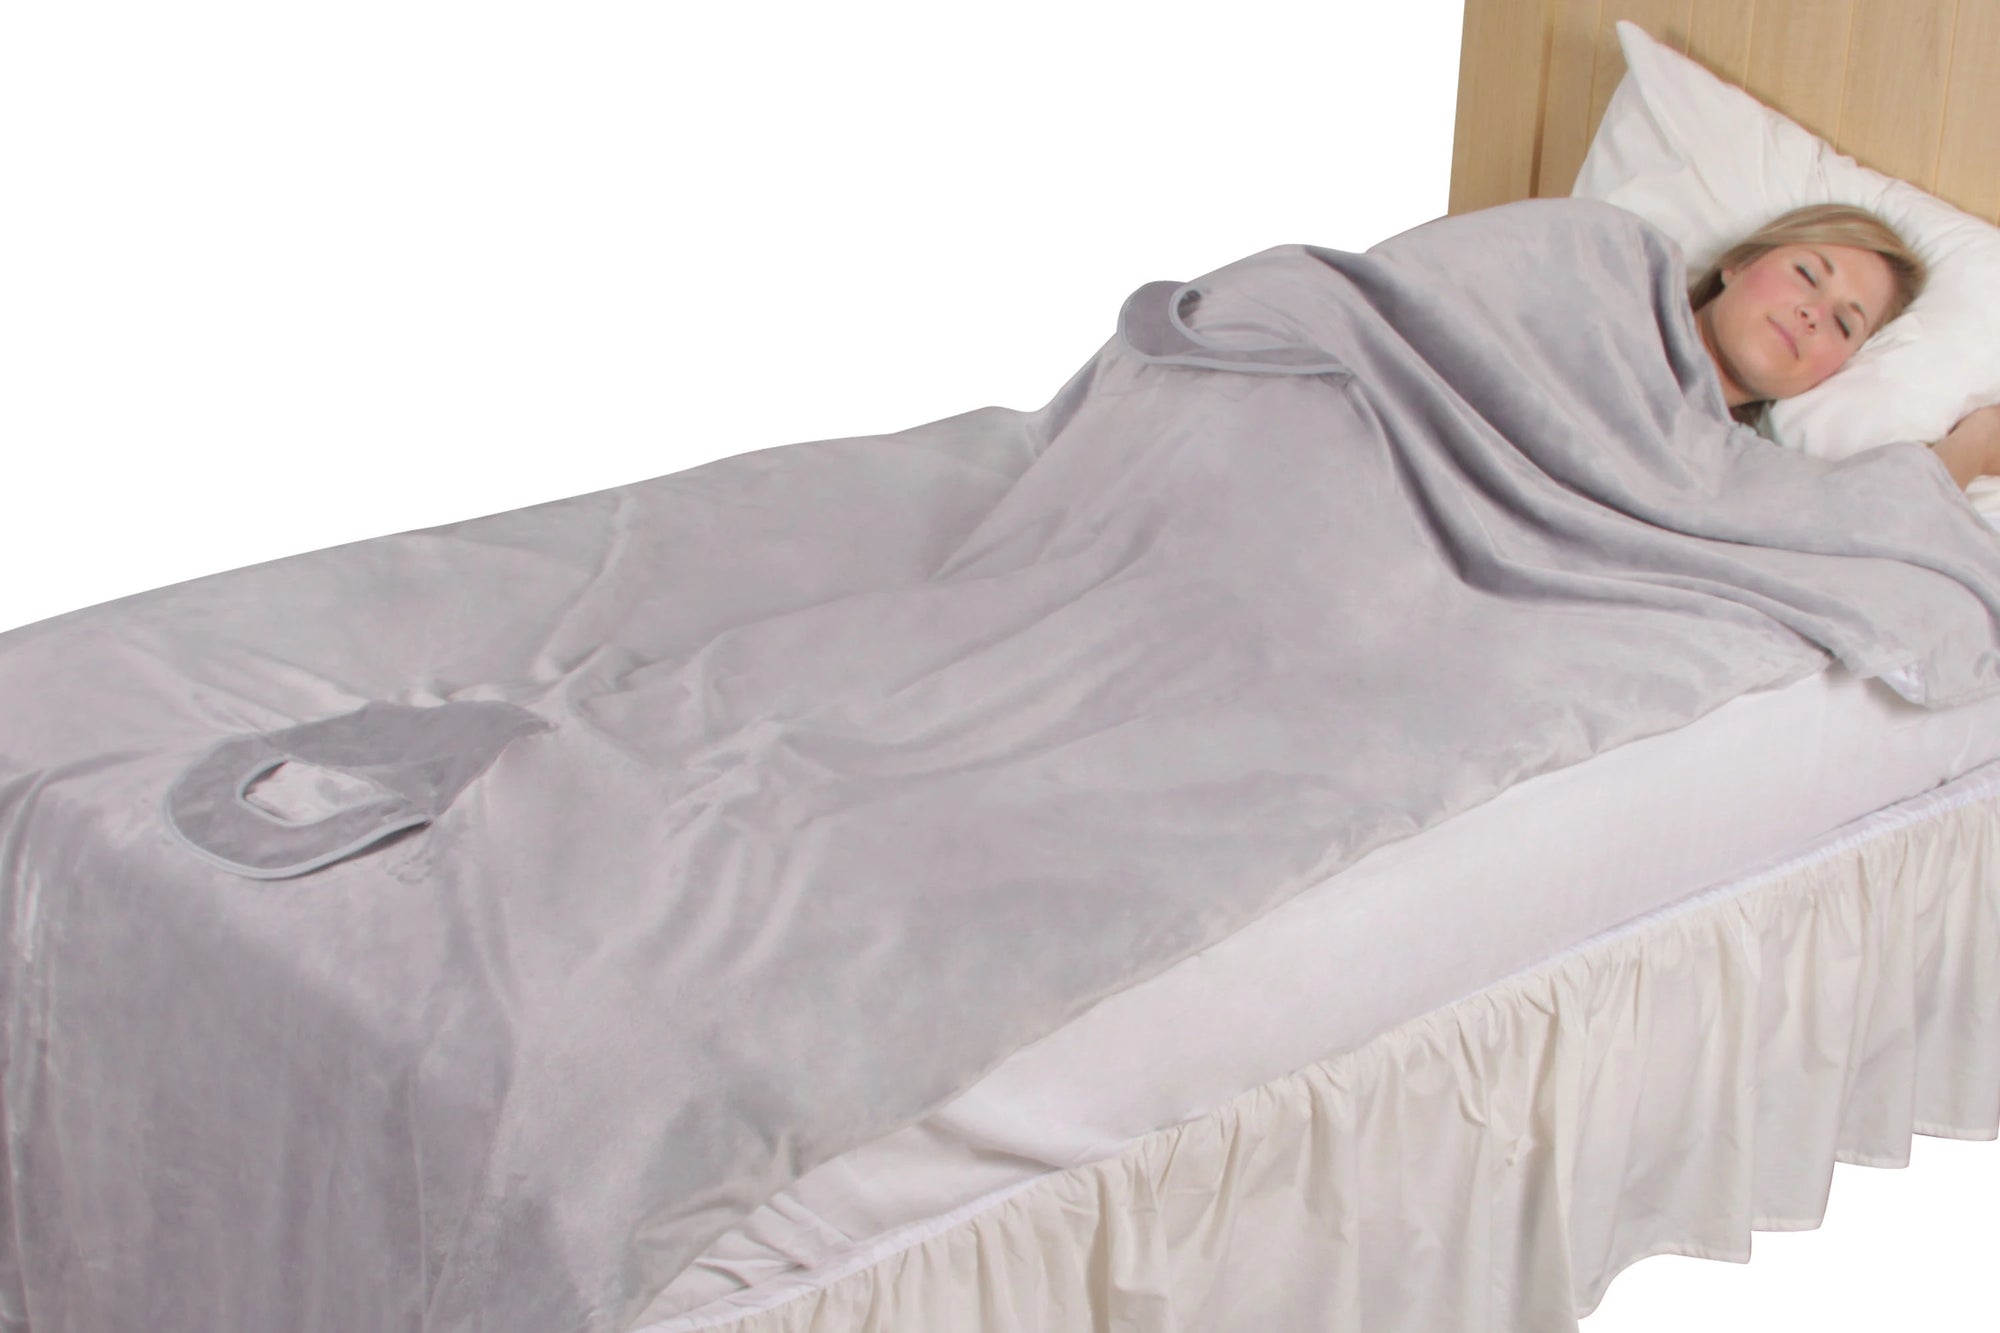 Cozy Dozy Blanket Sleeping Pose in Gray